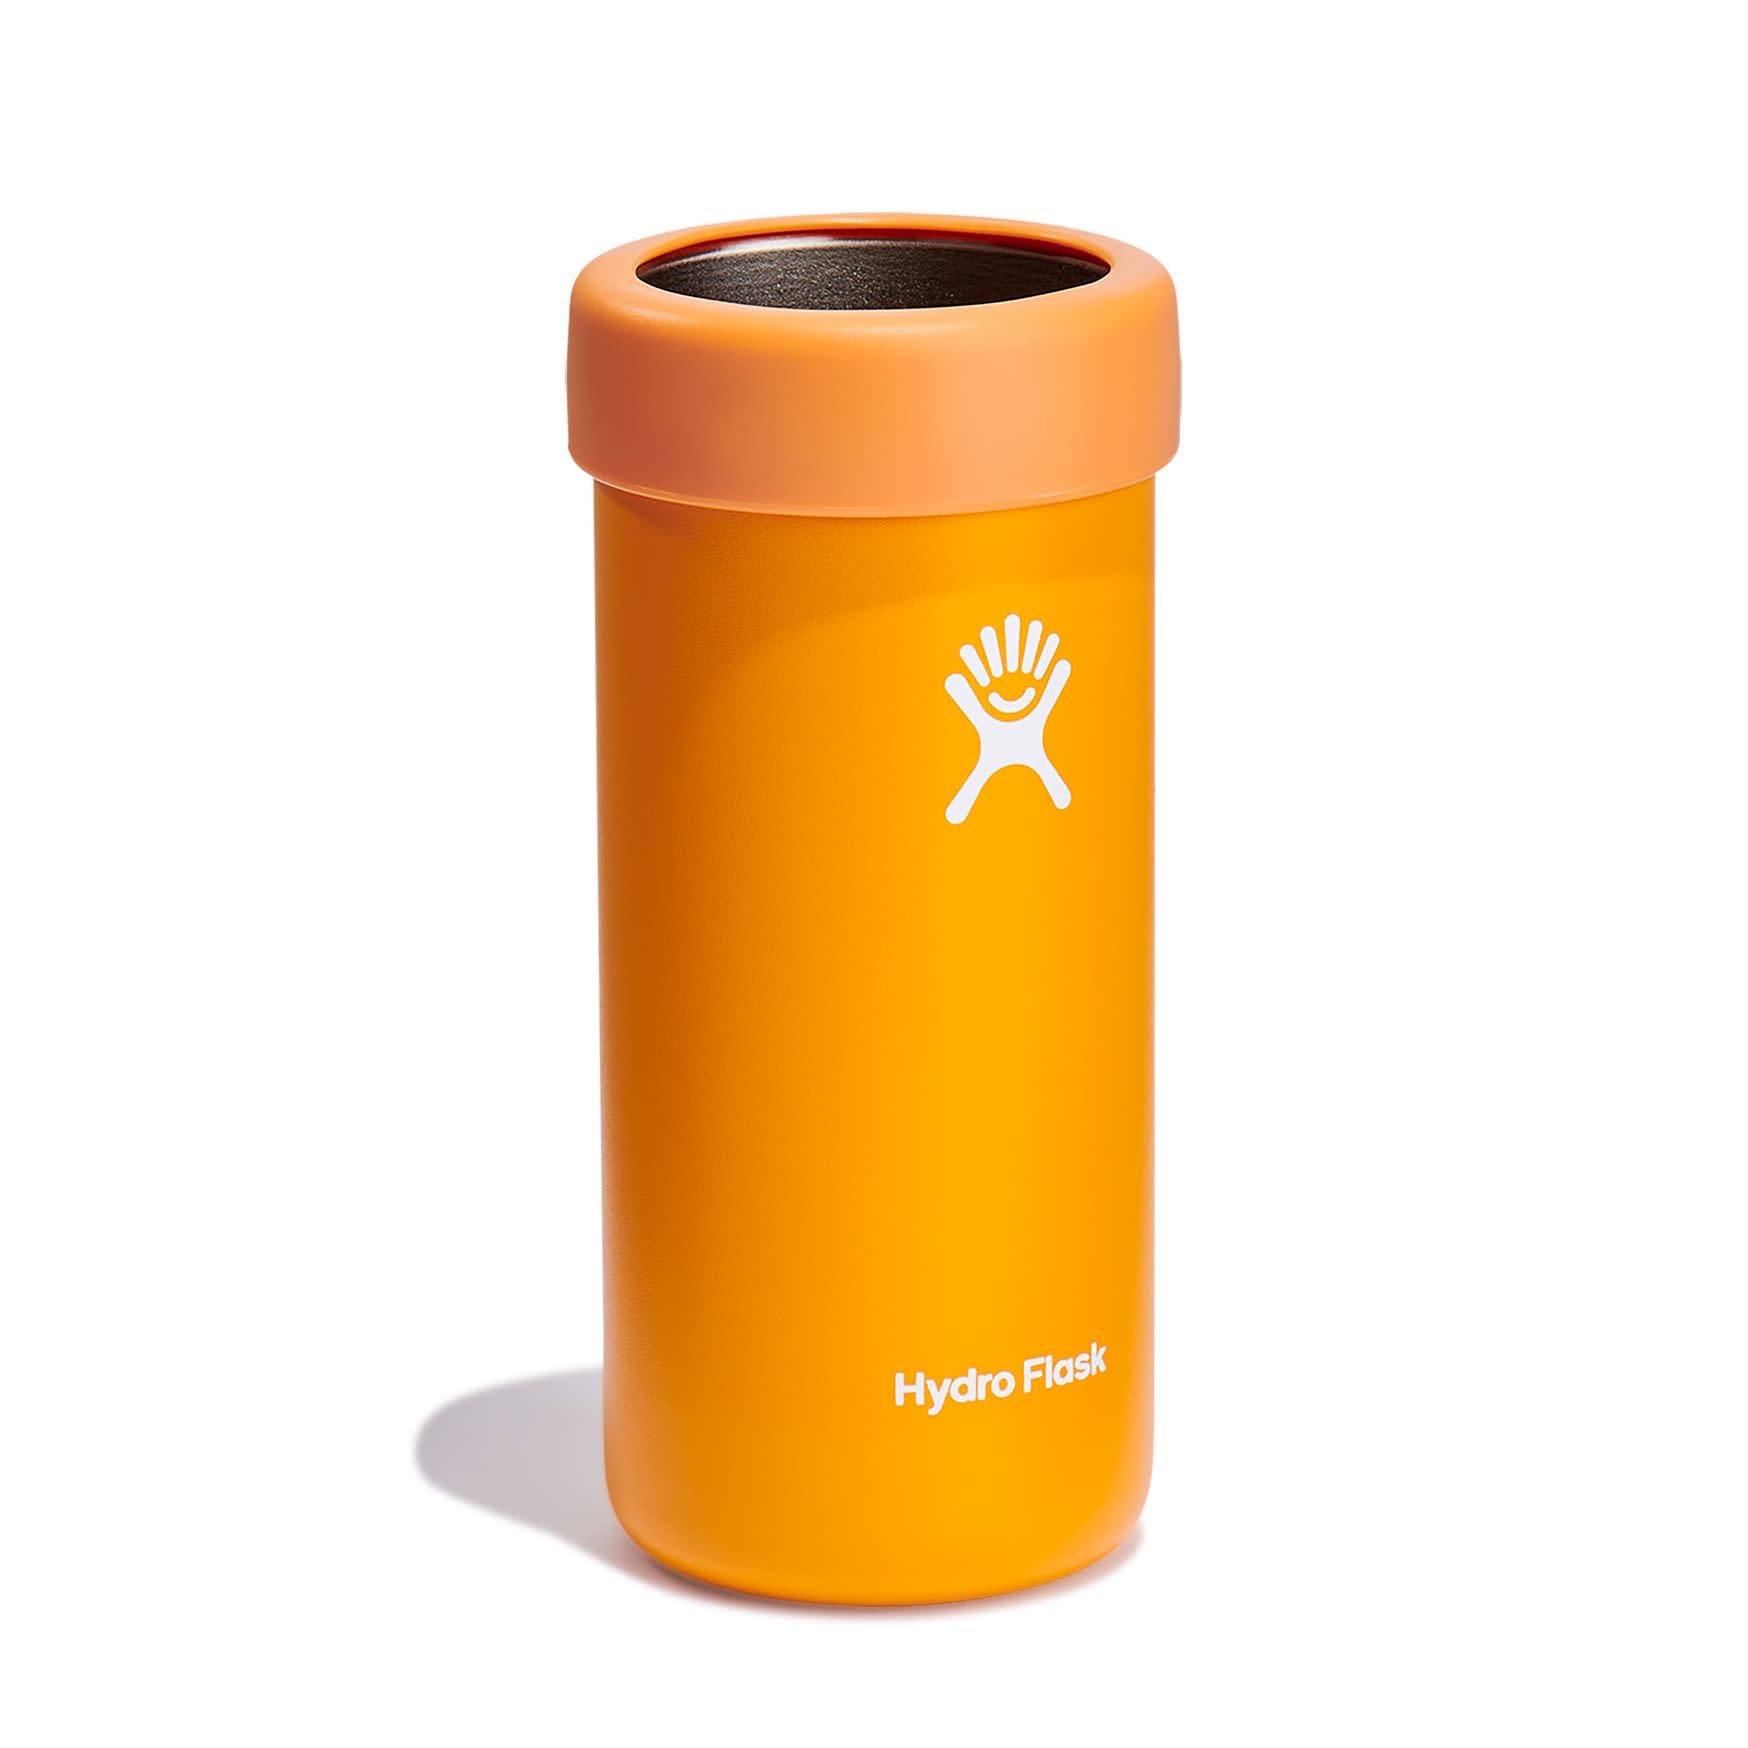 Hydroflask 12oz Slim Cooler Cup